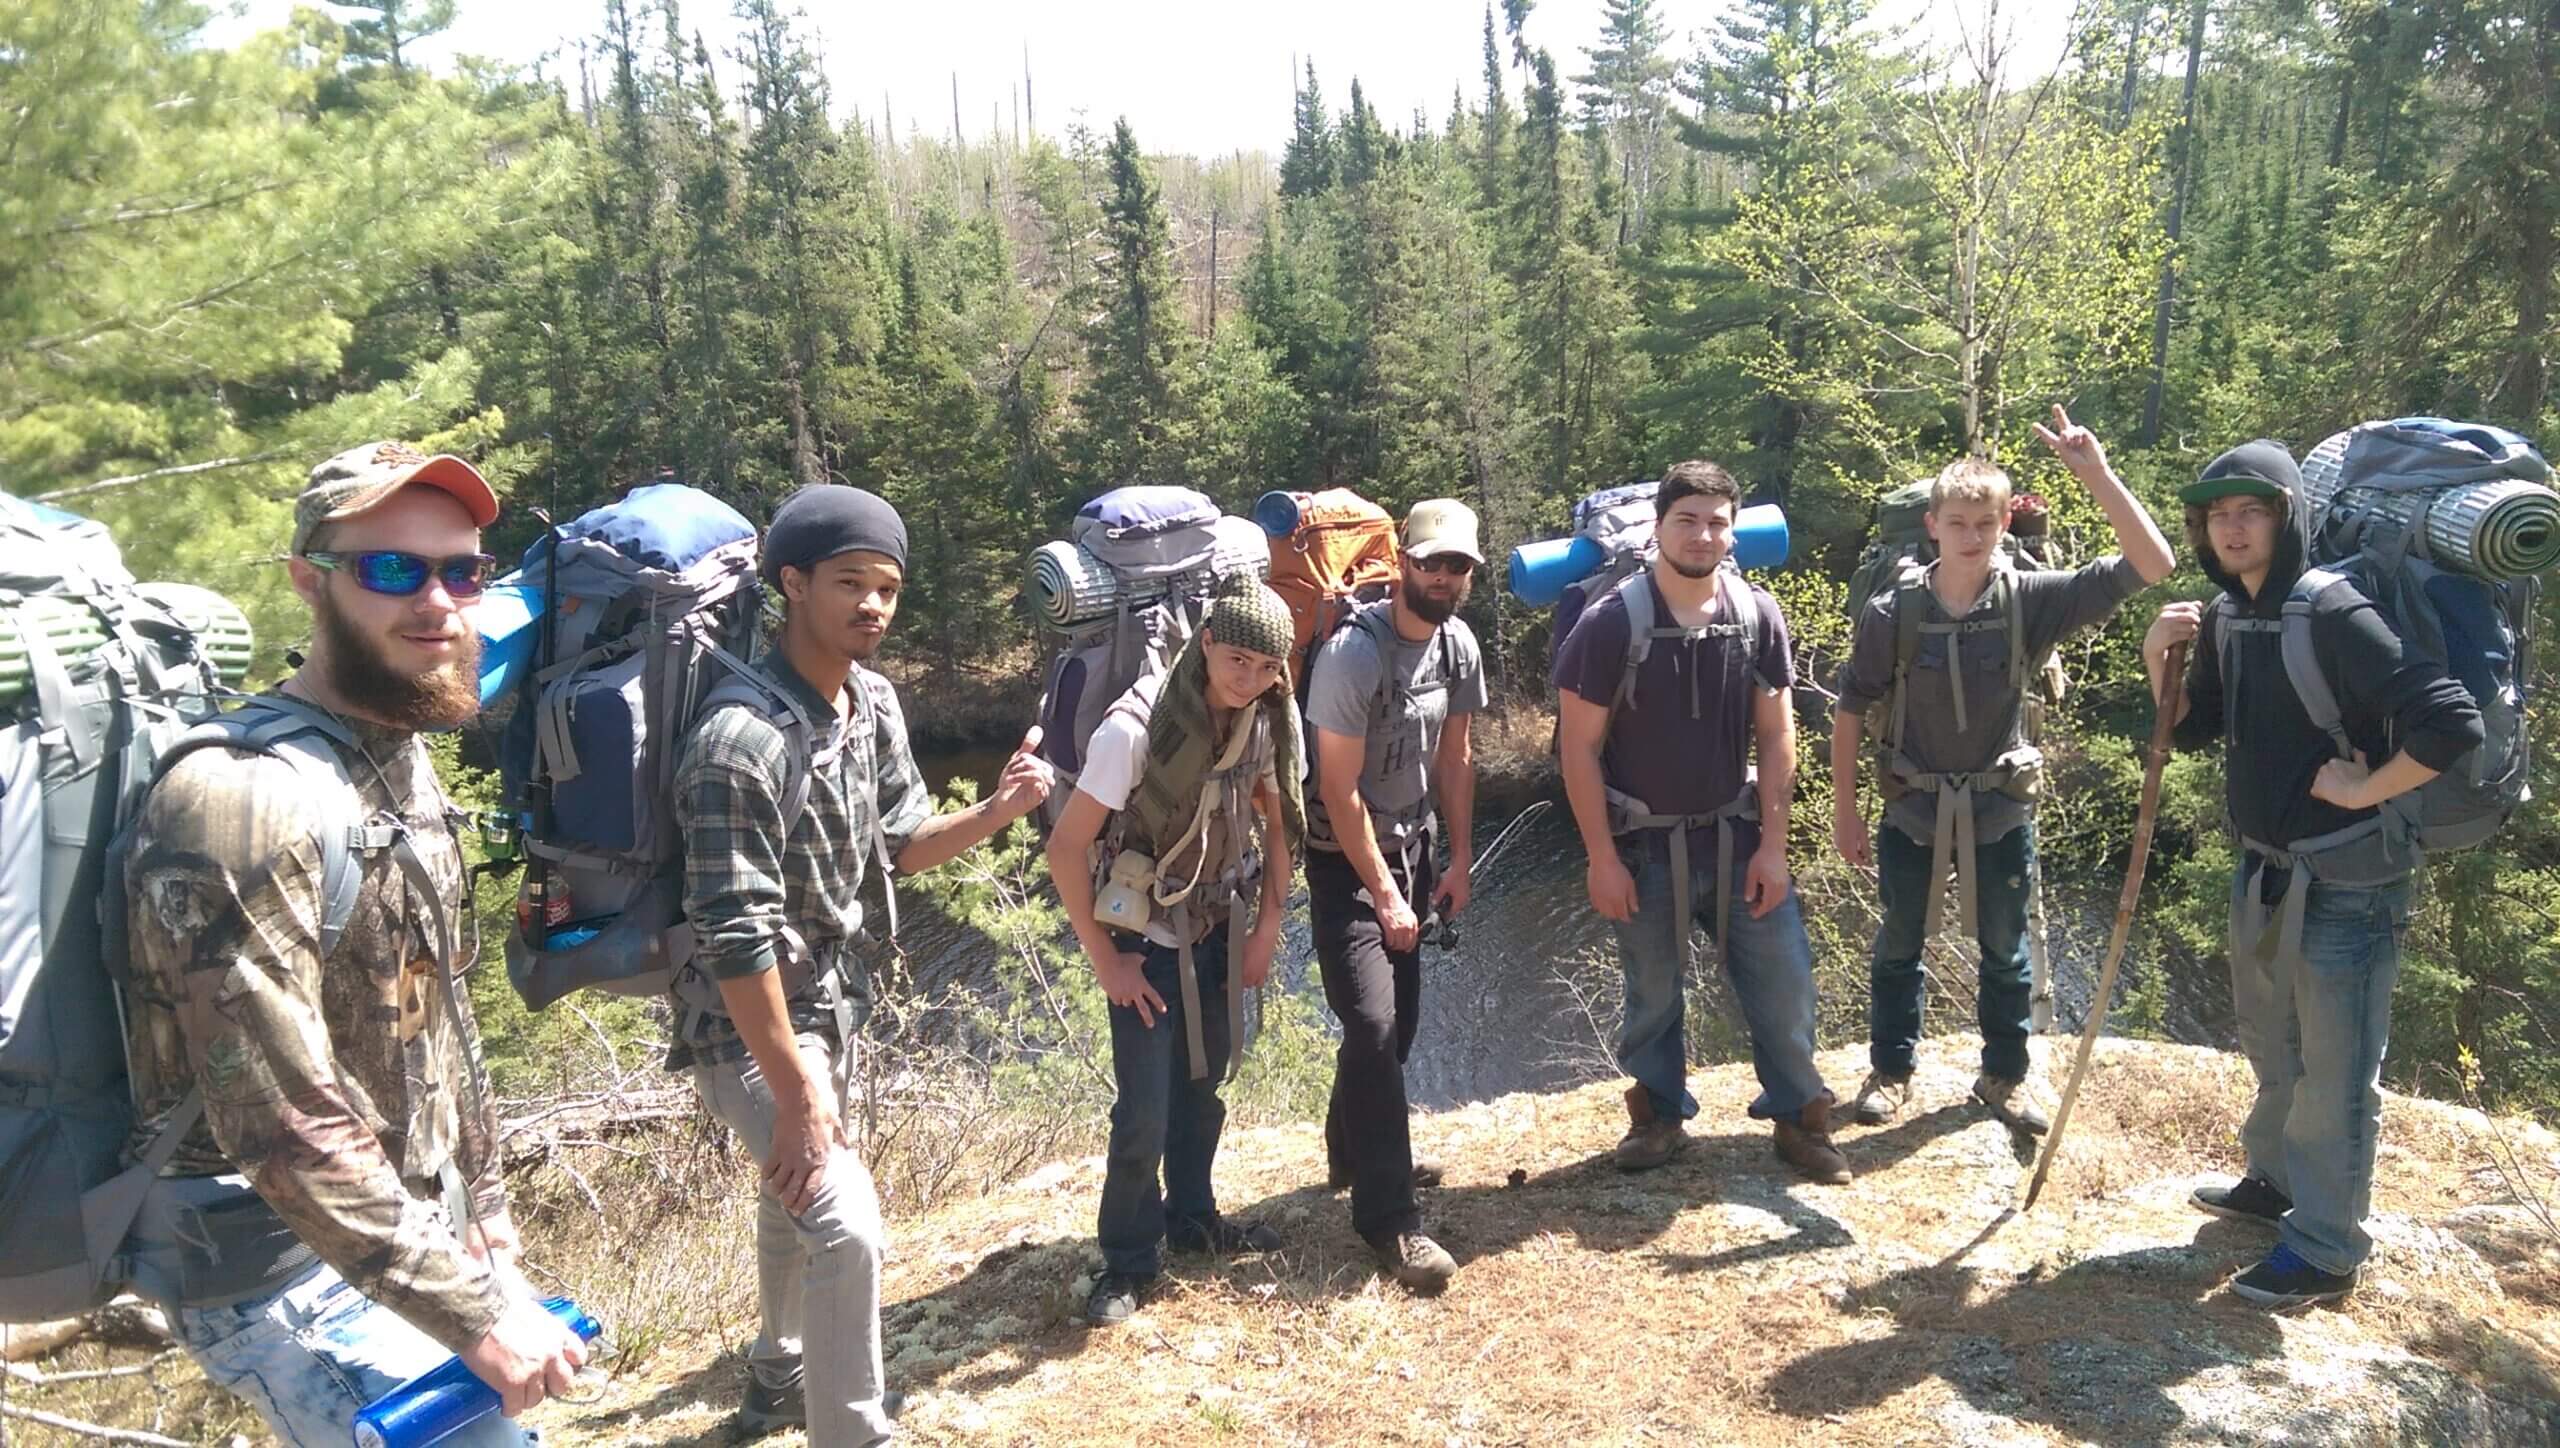 students hiking